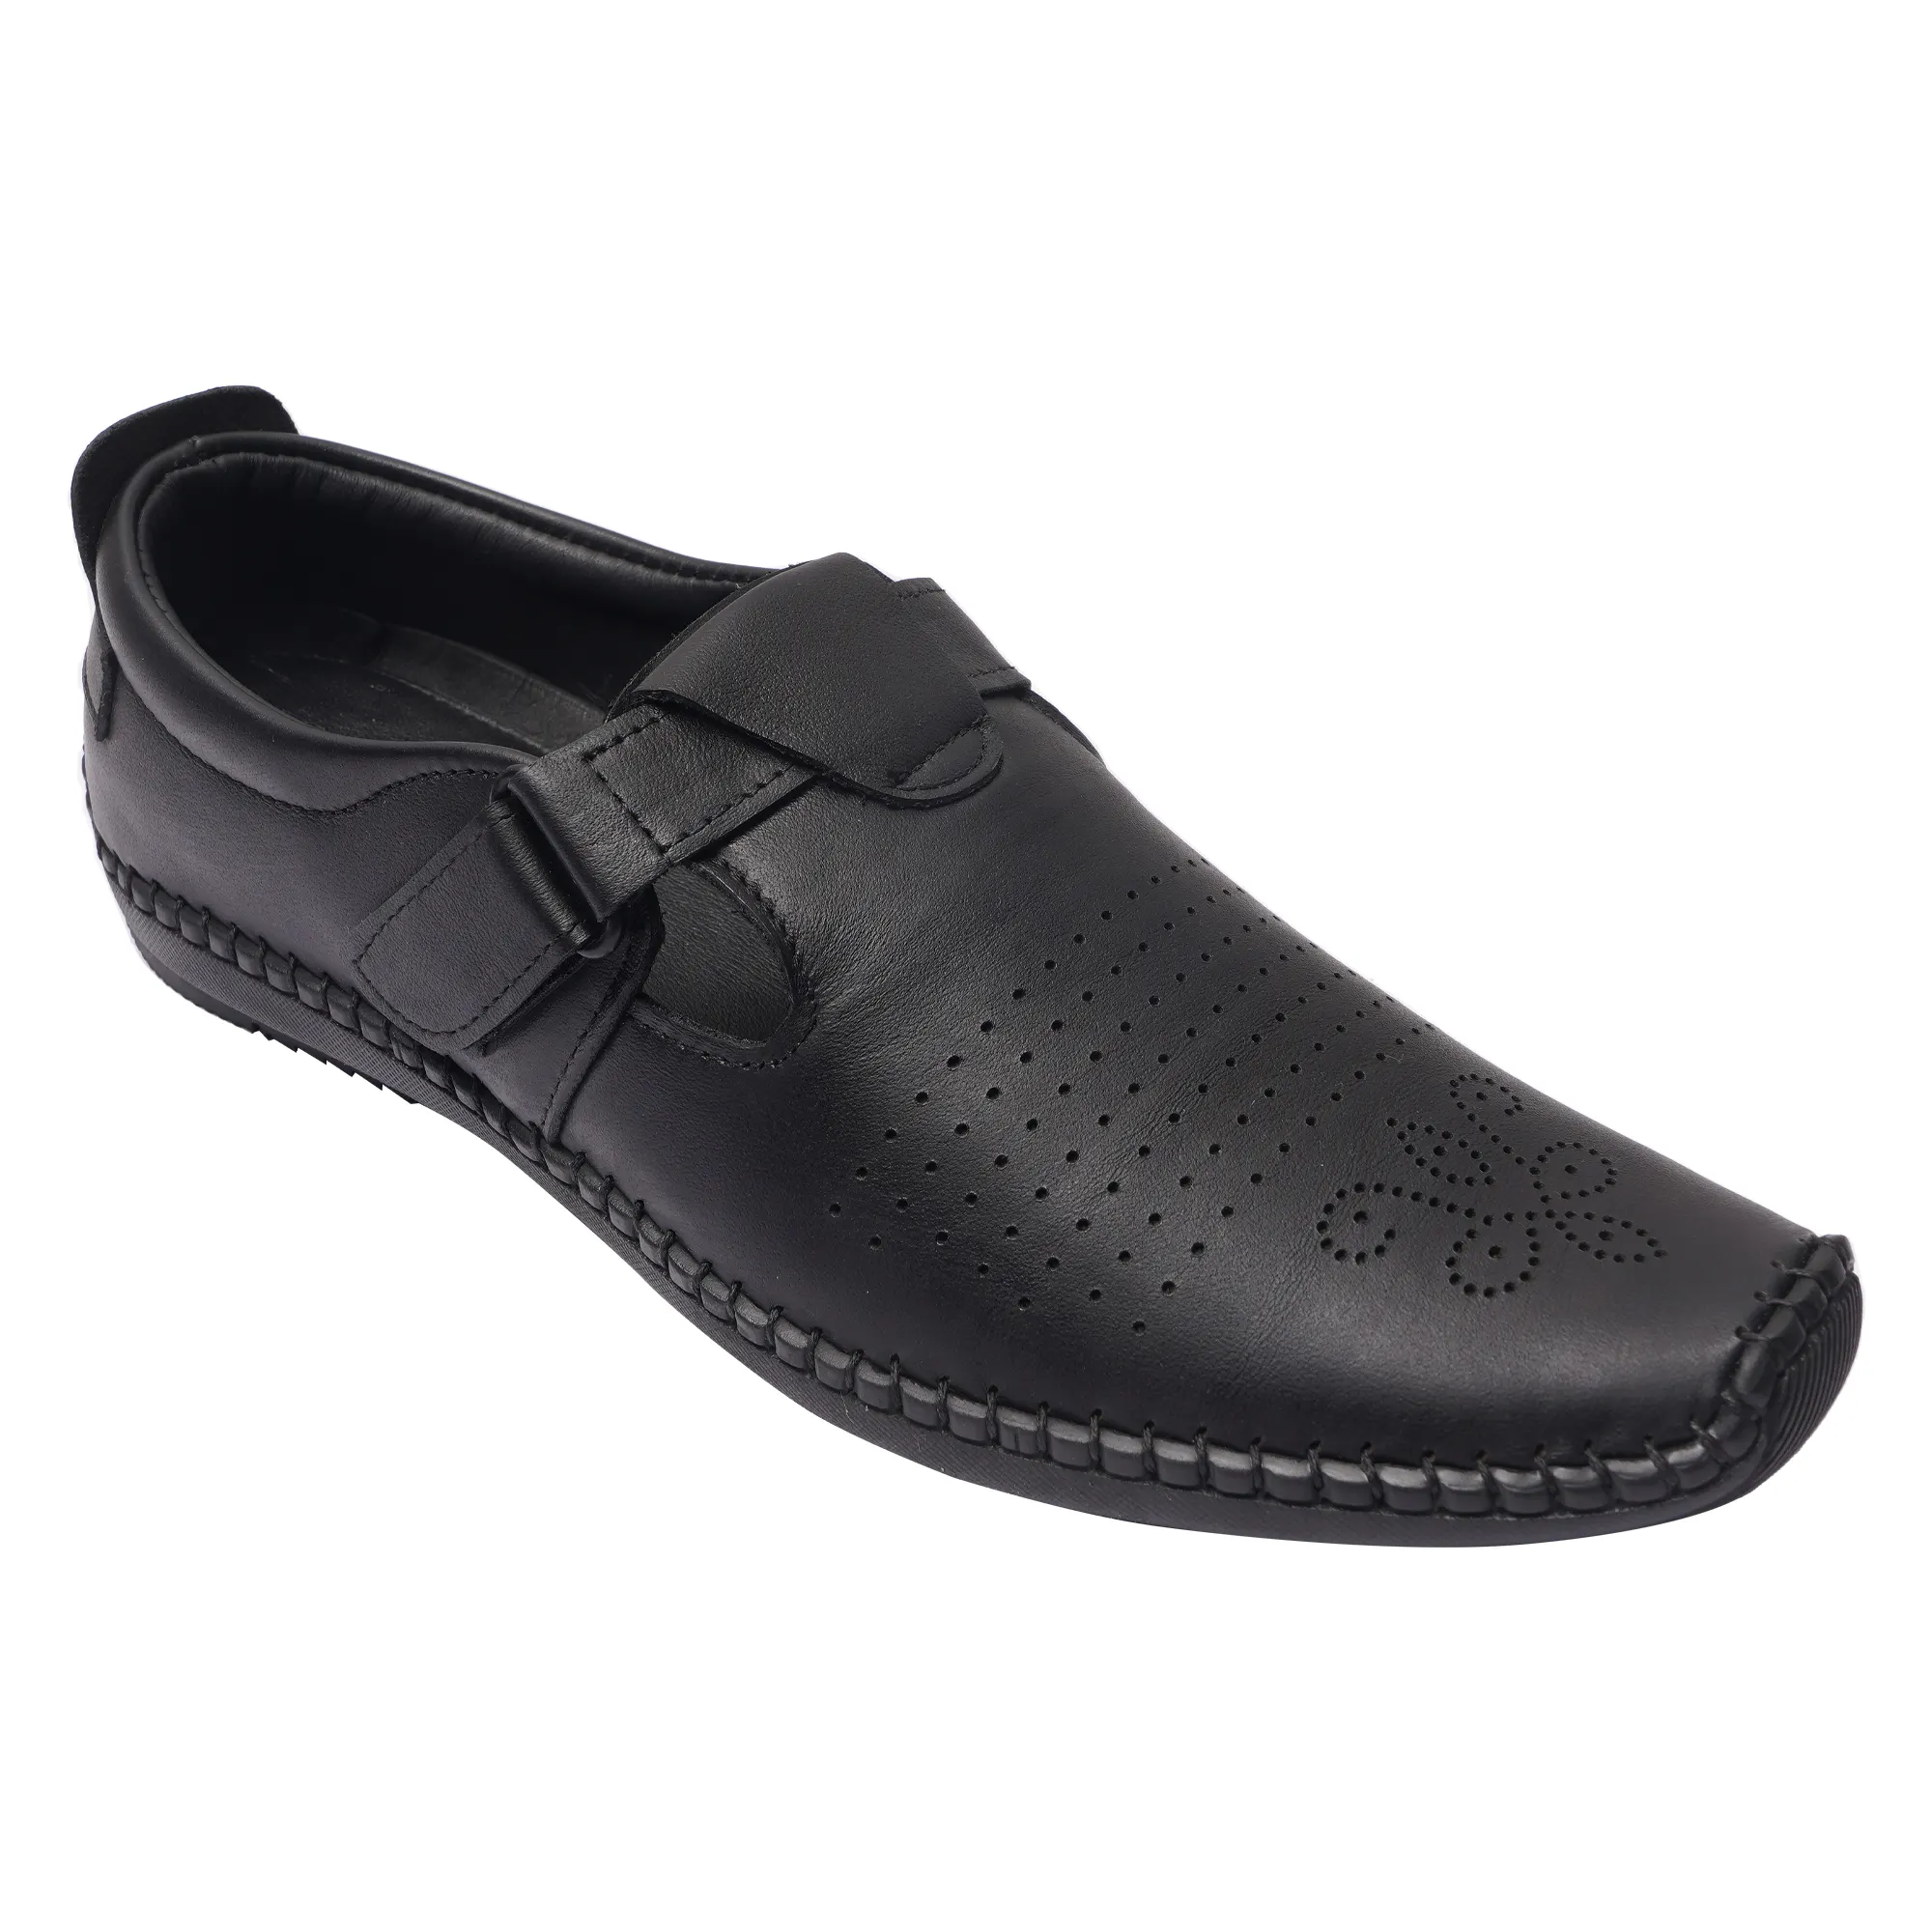 Emosis Breathable leather shoes business dress men's shoes set foot summer British formal slip-on fashion men's shoes ESH010H